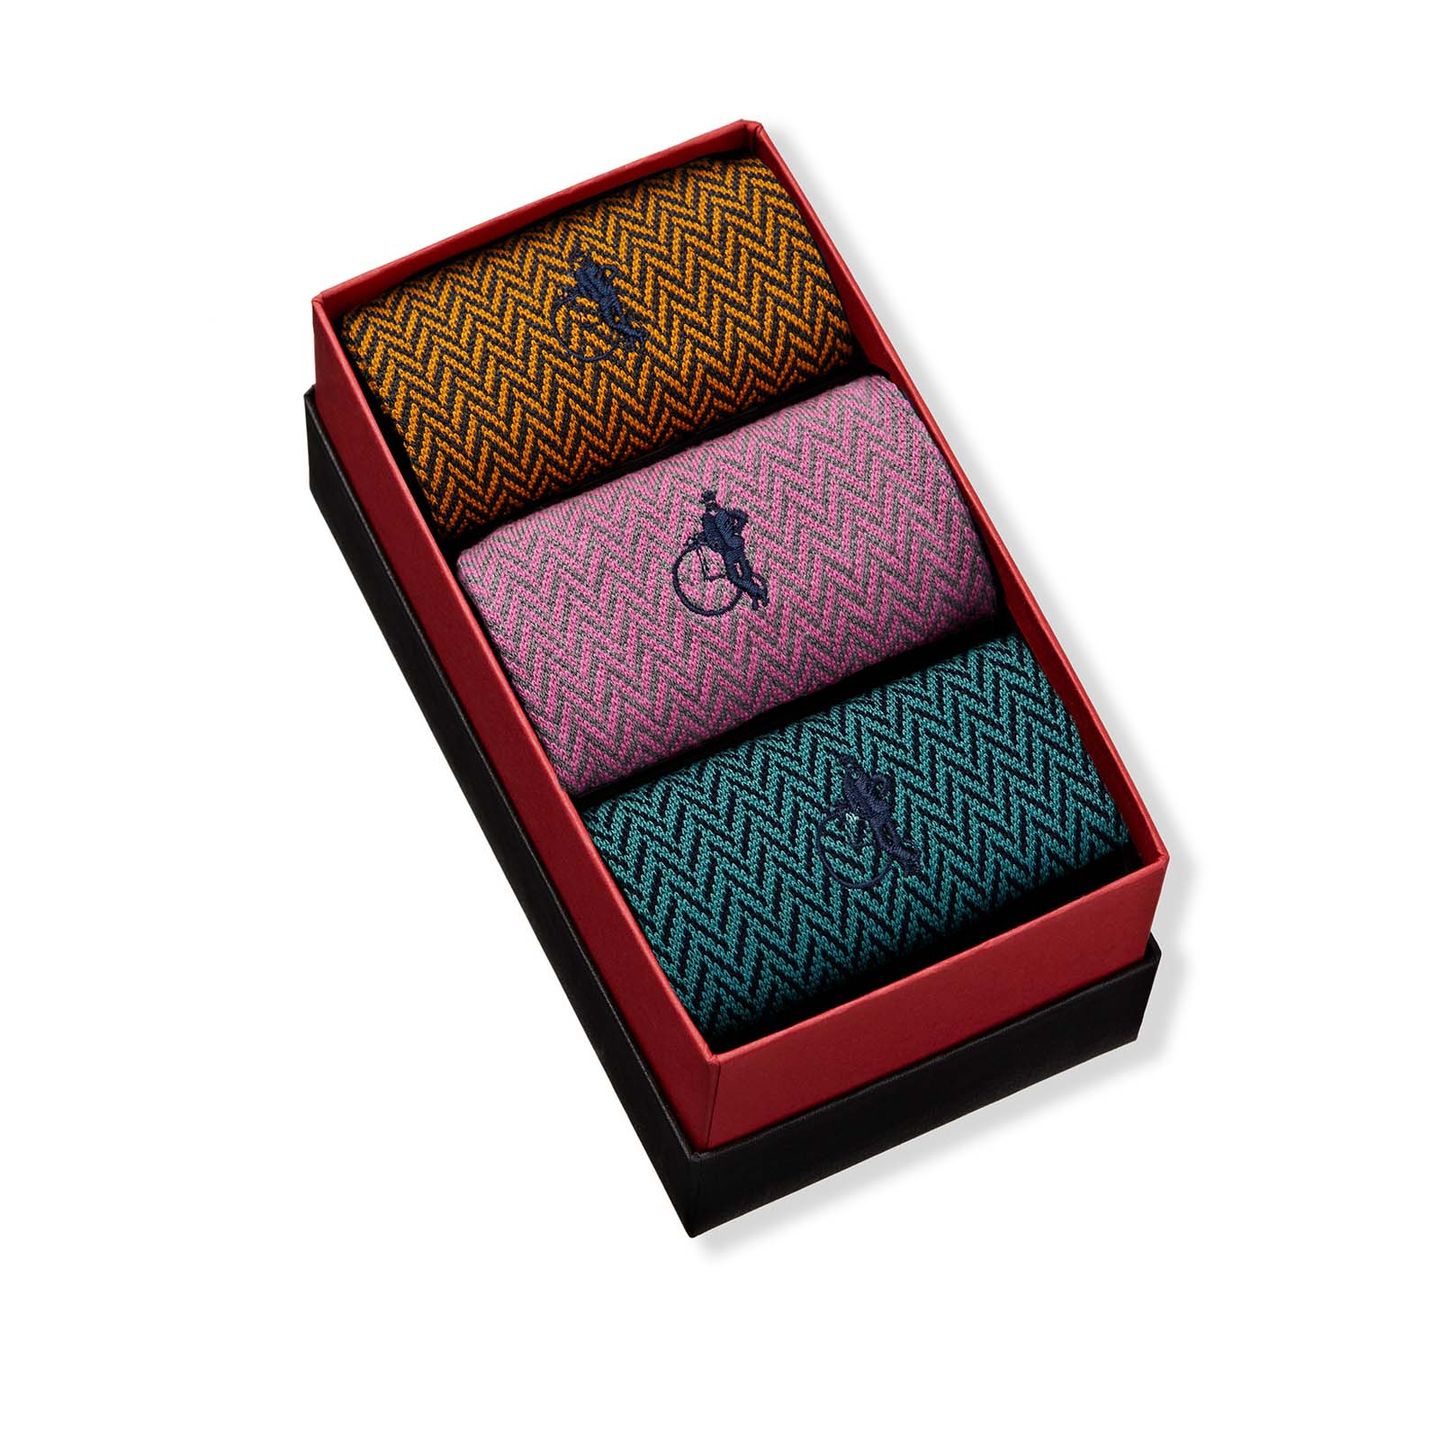 Bond St. Herringbone Style 2, Gift Set | London Sock Company